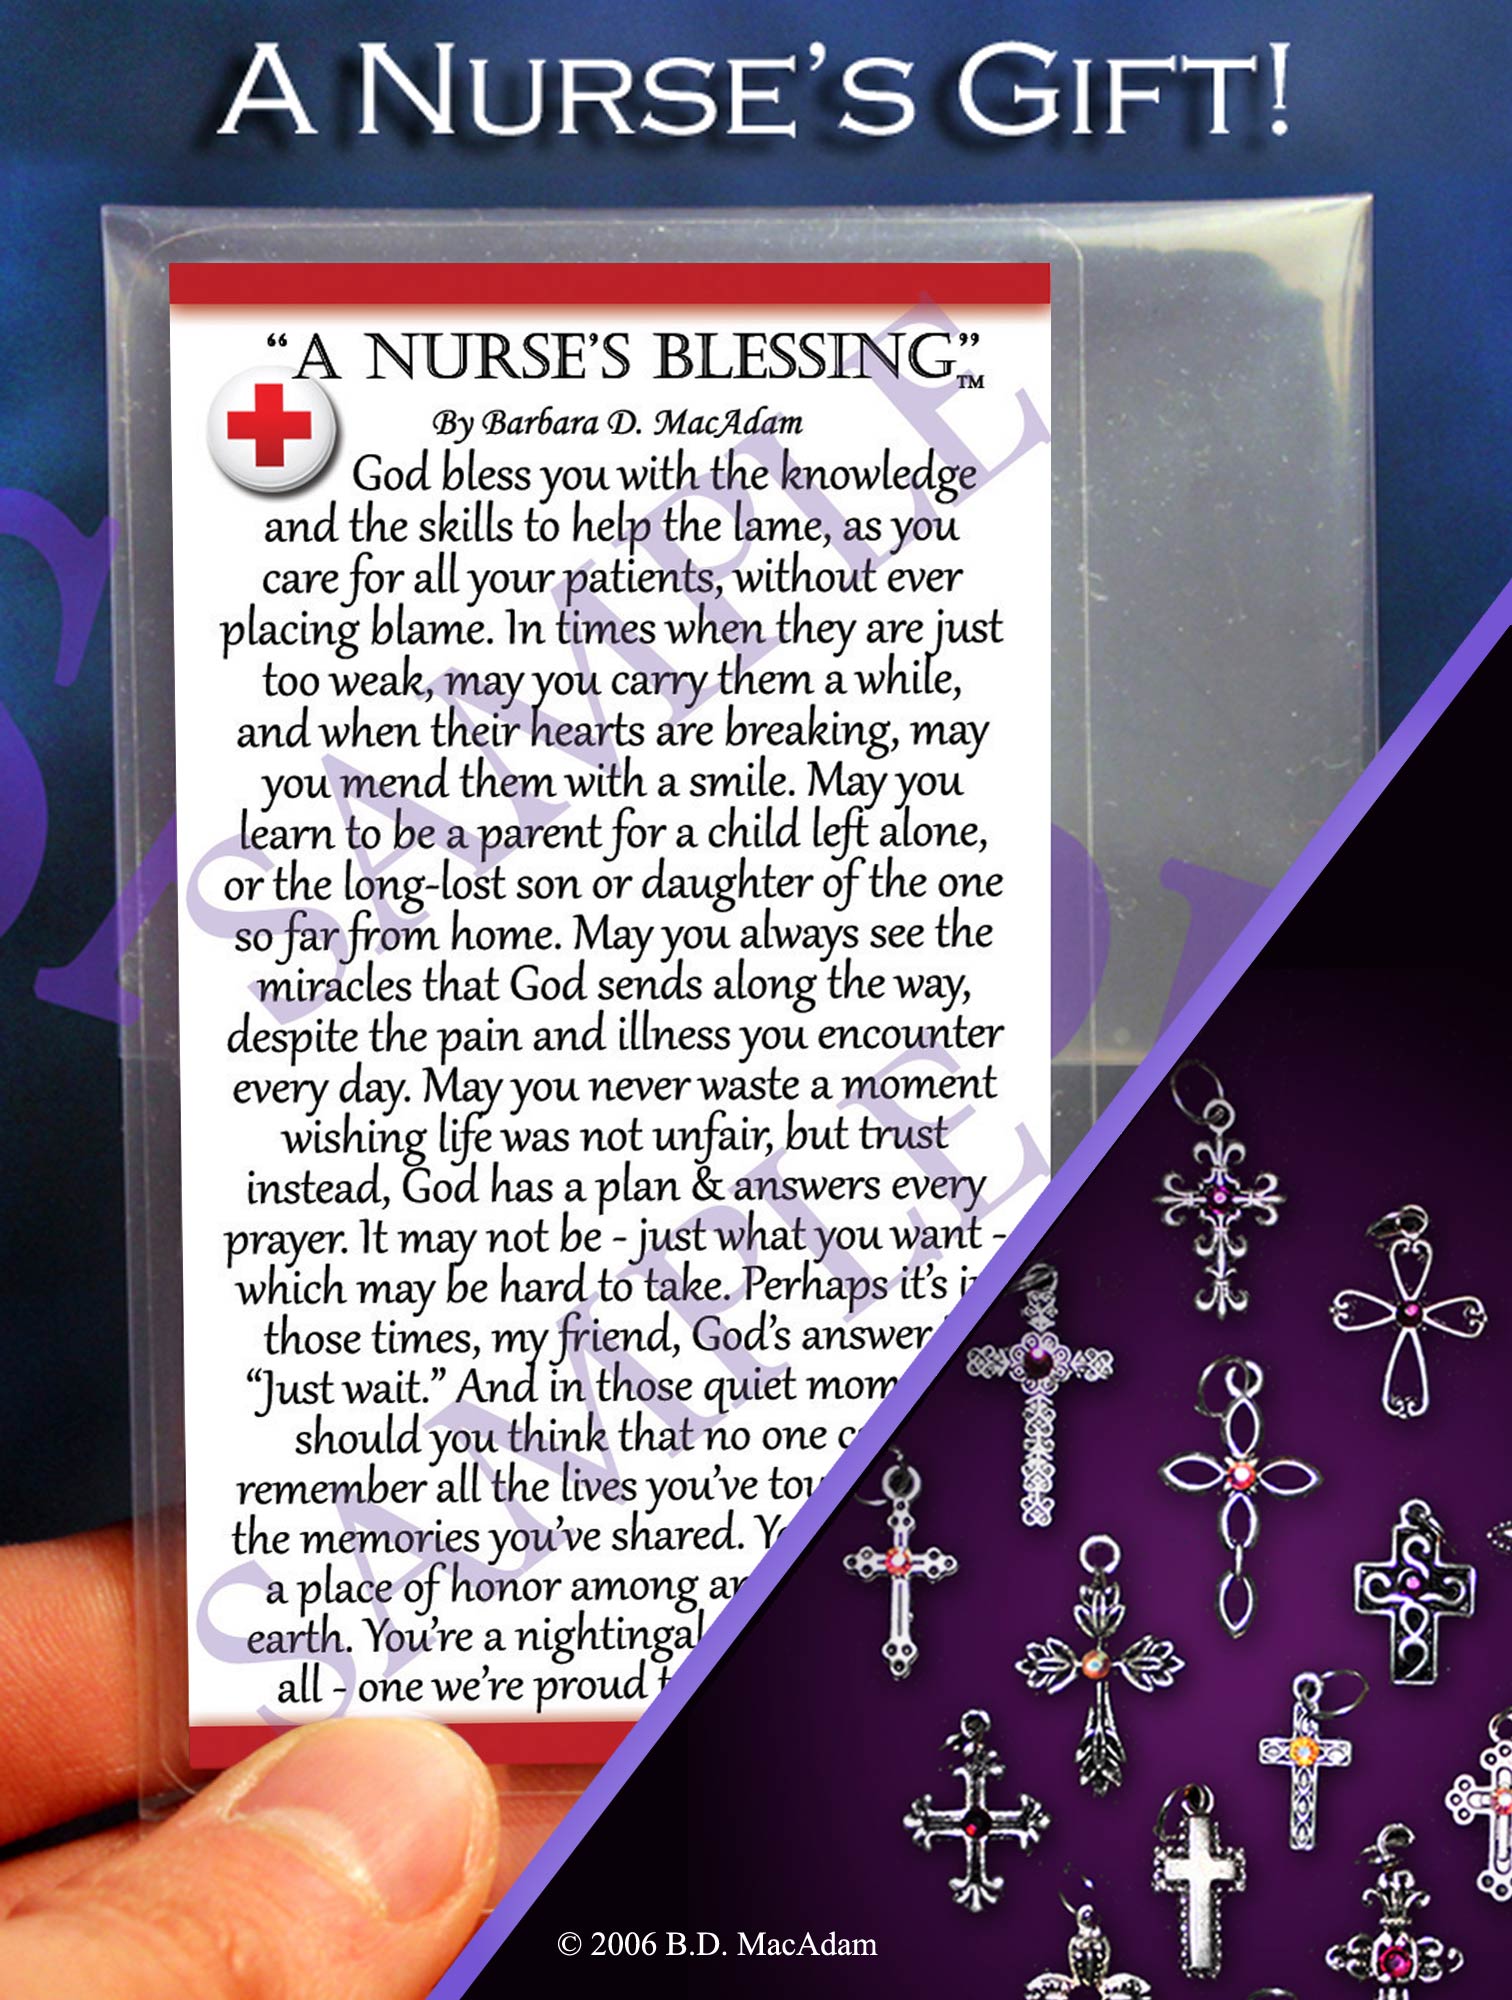 A Nurses Blessing - Pocket Blessing | PurpleWishingGate.com